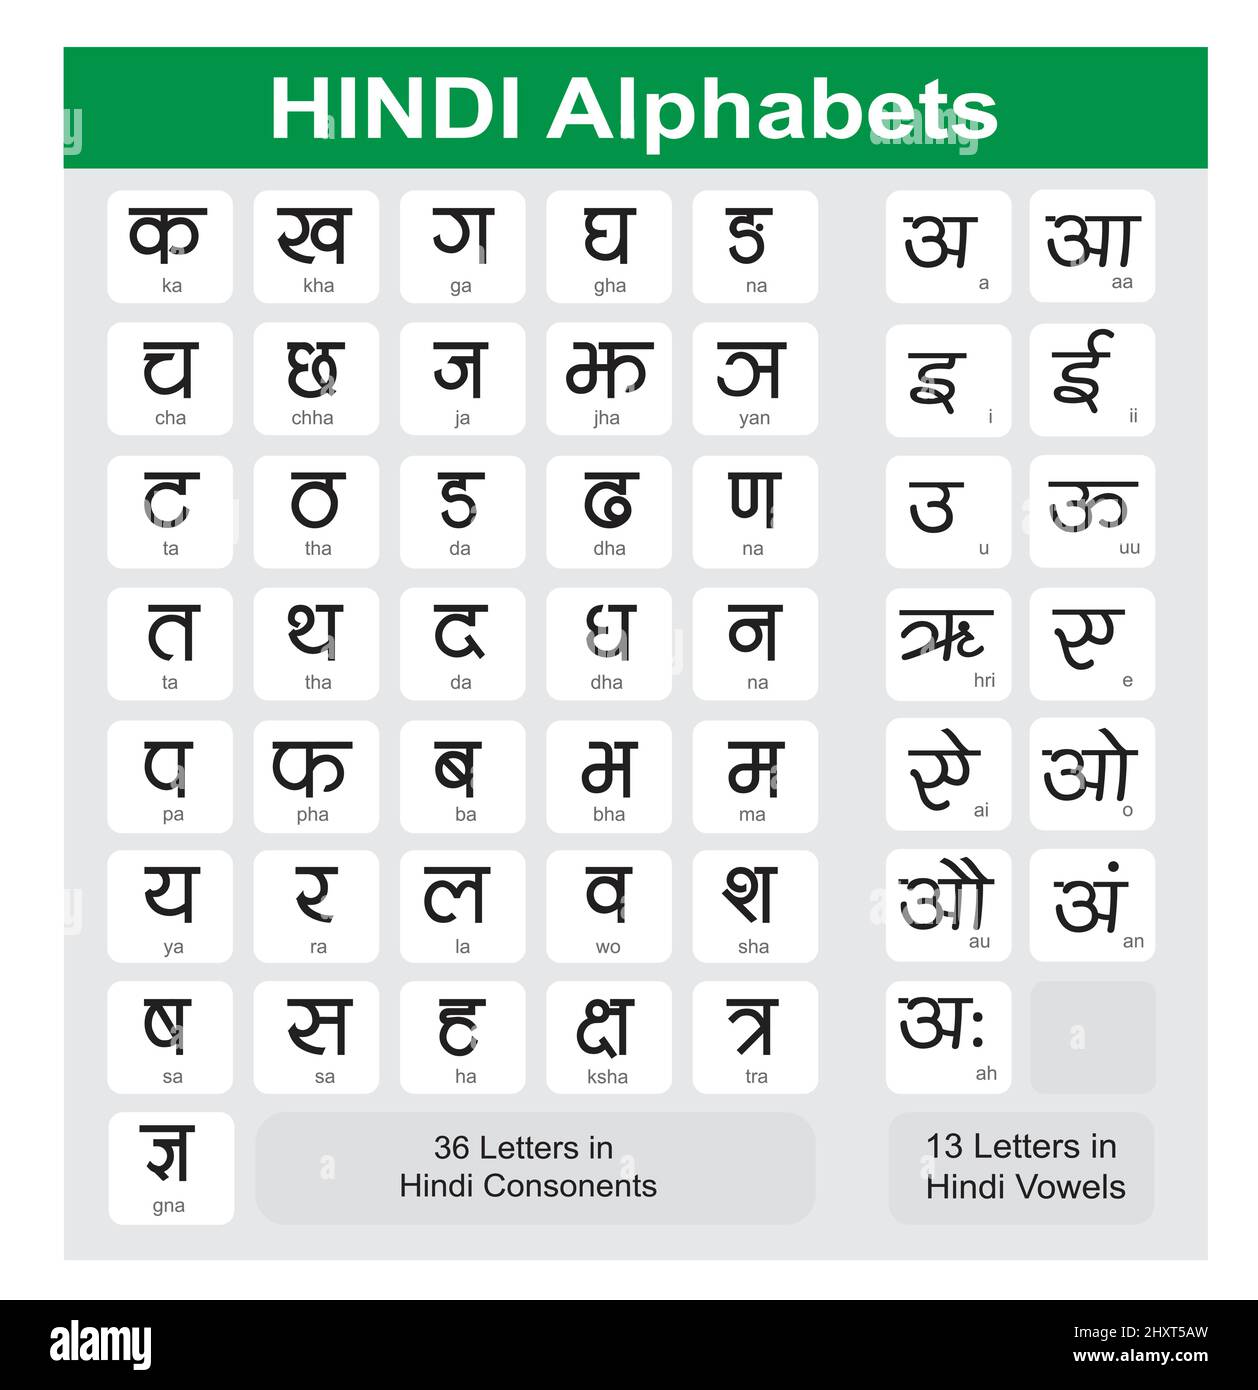 english alphabet chart